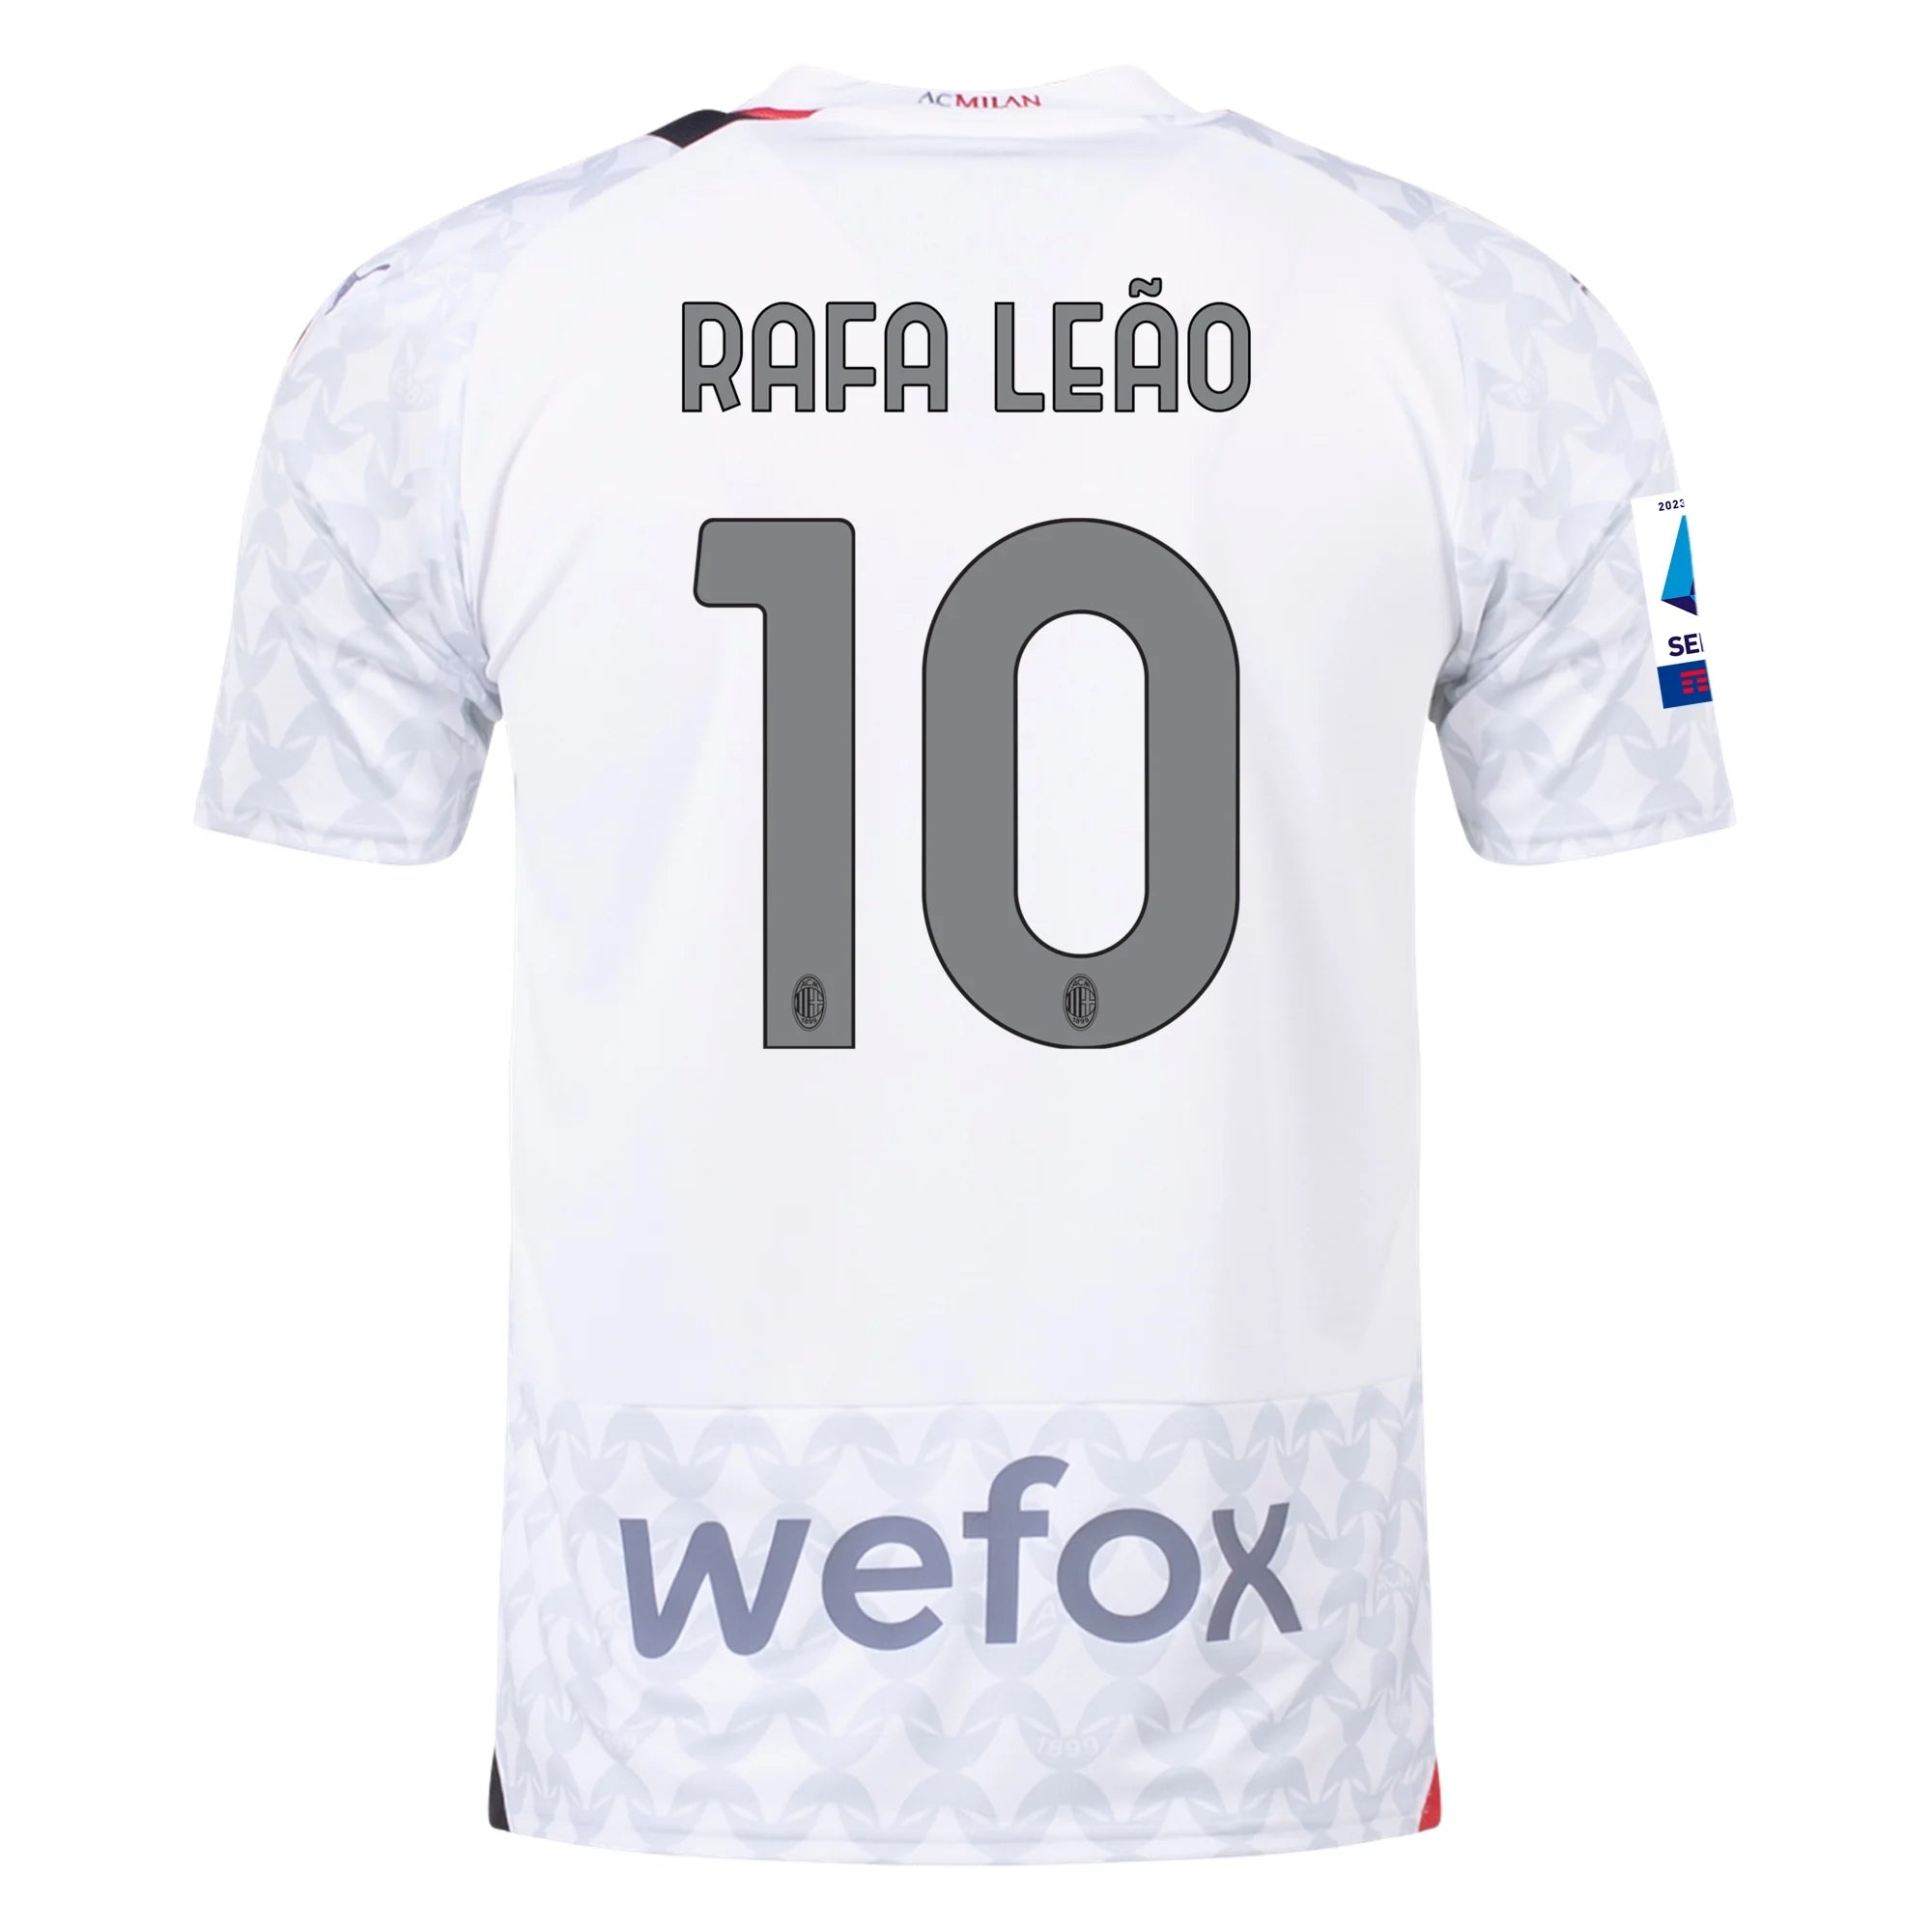 Rafa Leão AC Milan 23/24 Authentic Third Jersey - SoccerArmor 